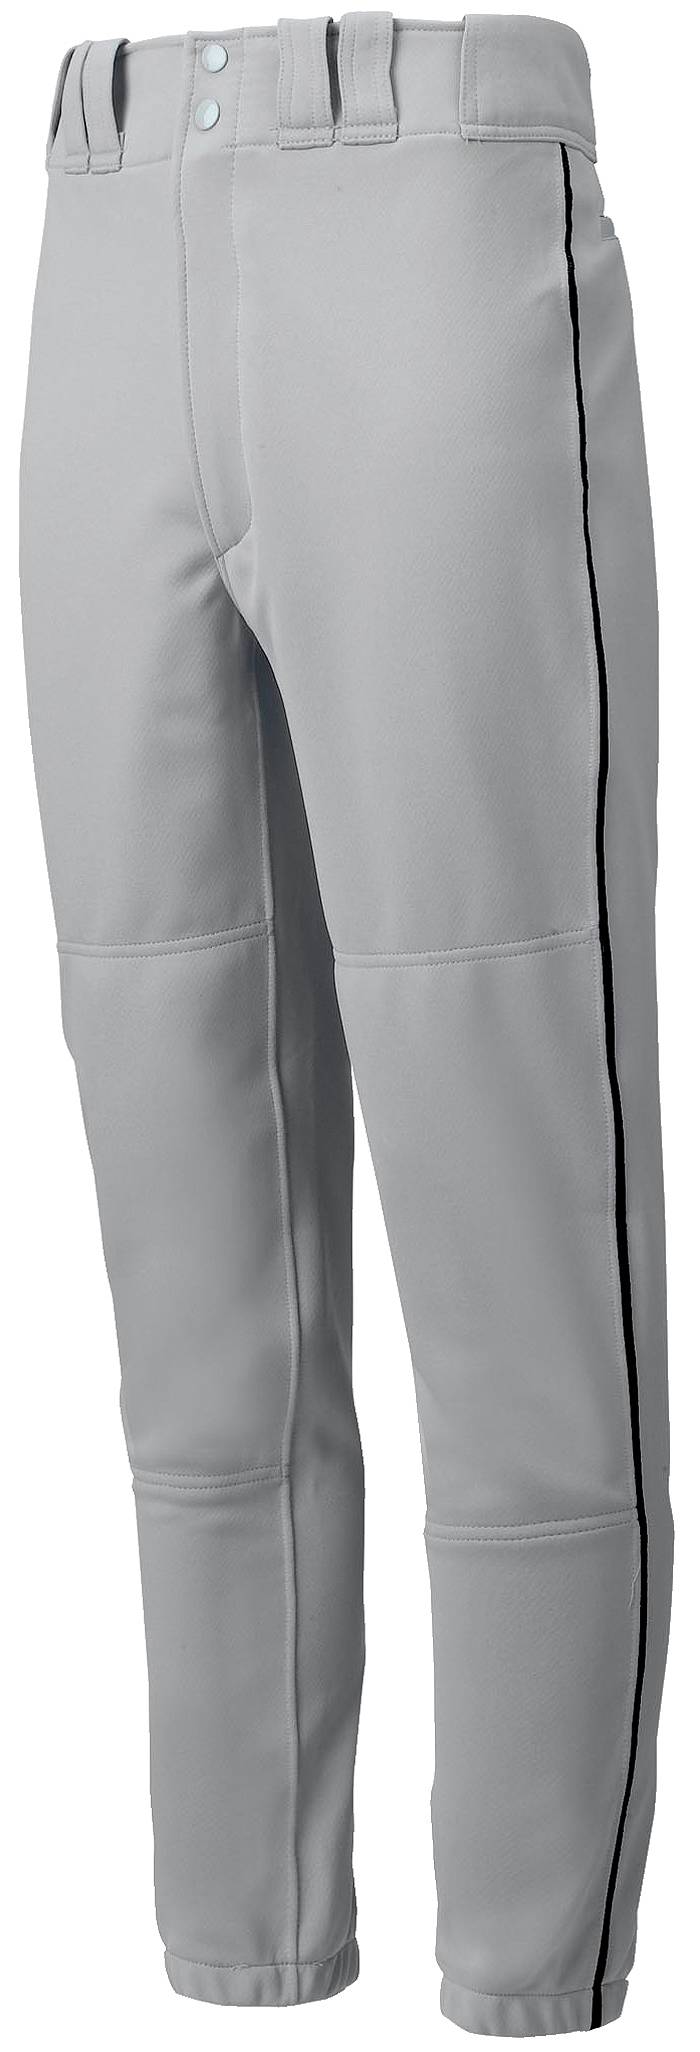  Nike Men's Swoosh Piped Dri-FIT Baseball Pants (Grey/Royal,  Large) : Clothing, Shoes & Jewelry